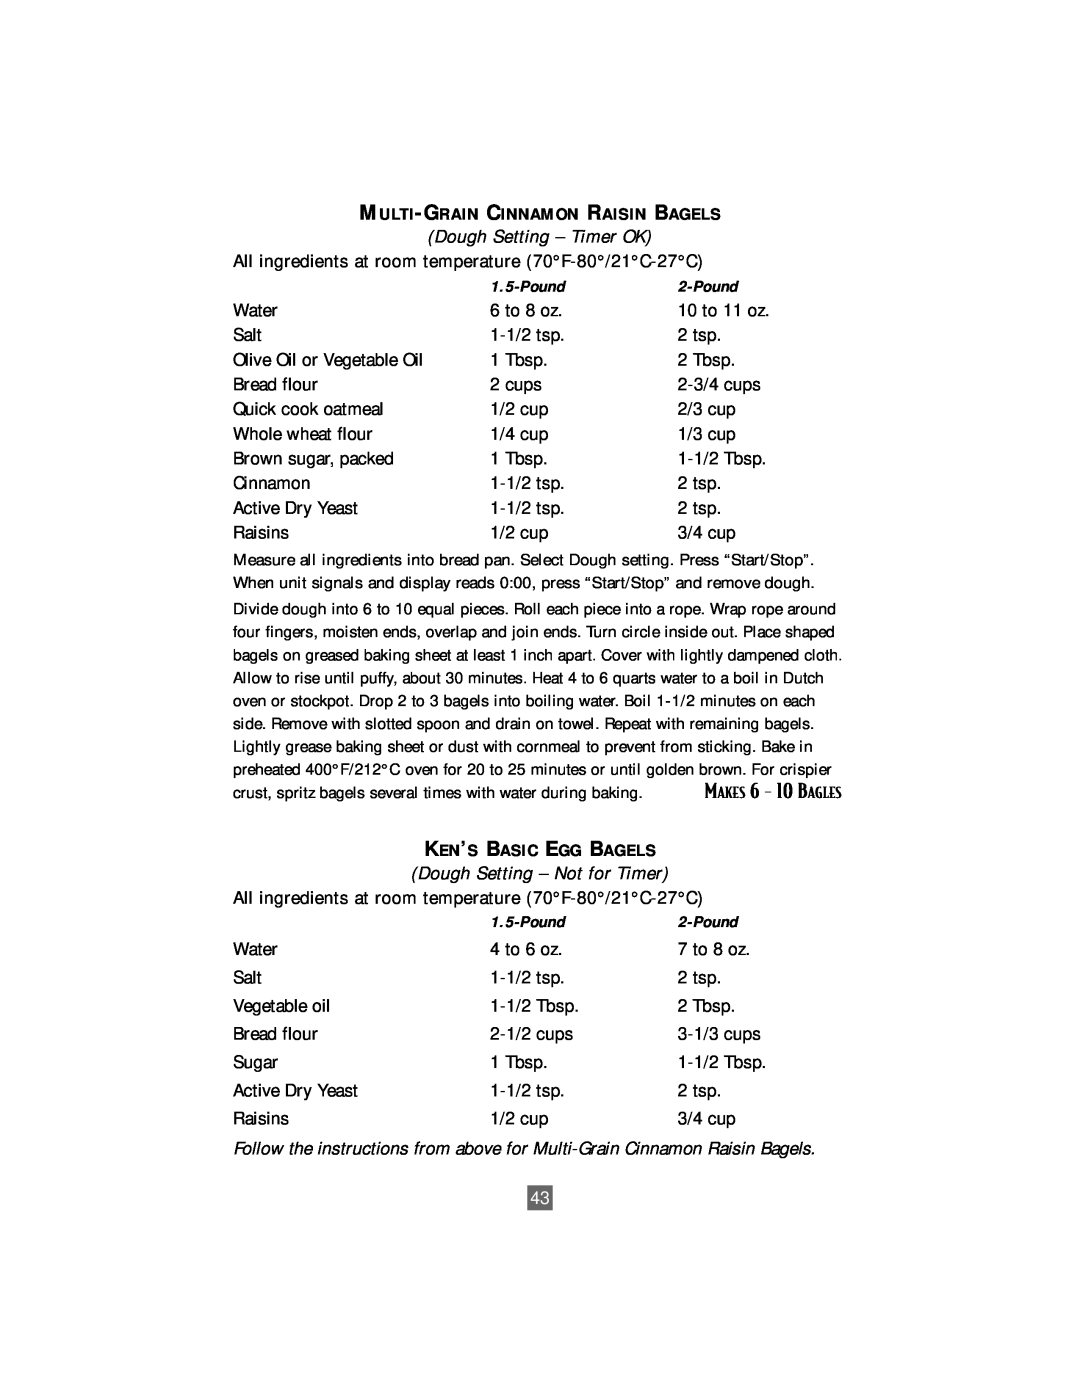 Sunbeam Bread/Dough Maker manual Dough Setting - Timer OK, Multi-Grain Cinnamon Raisin Bagels, 3-1/3 cups 